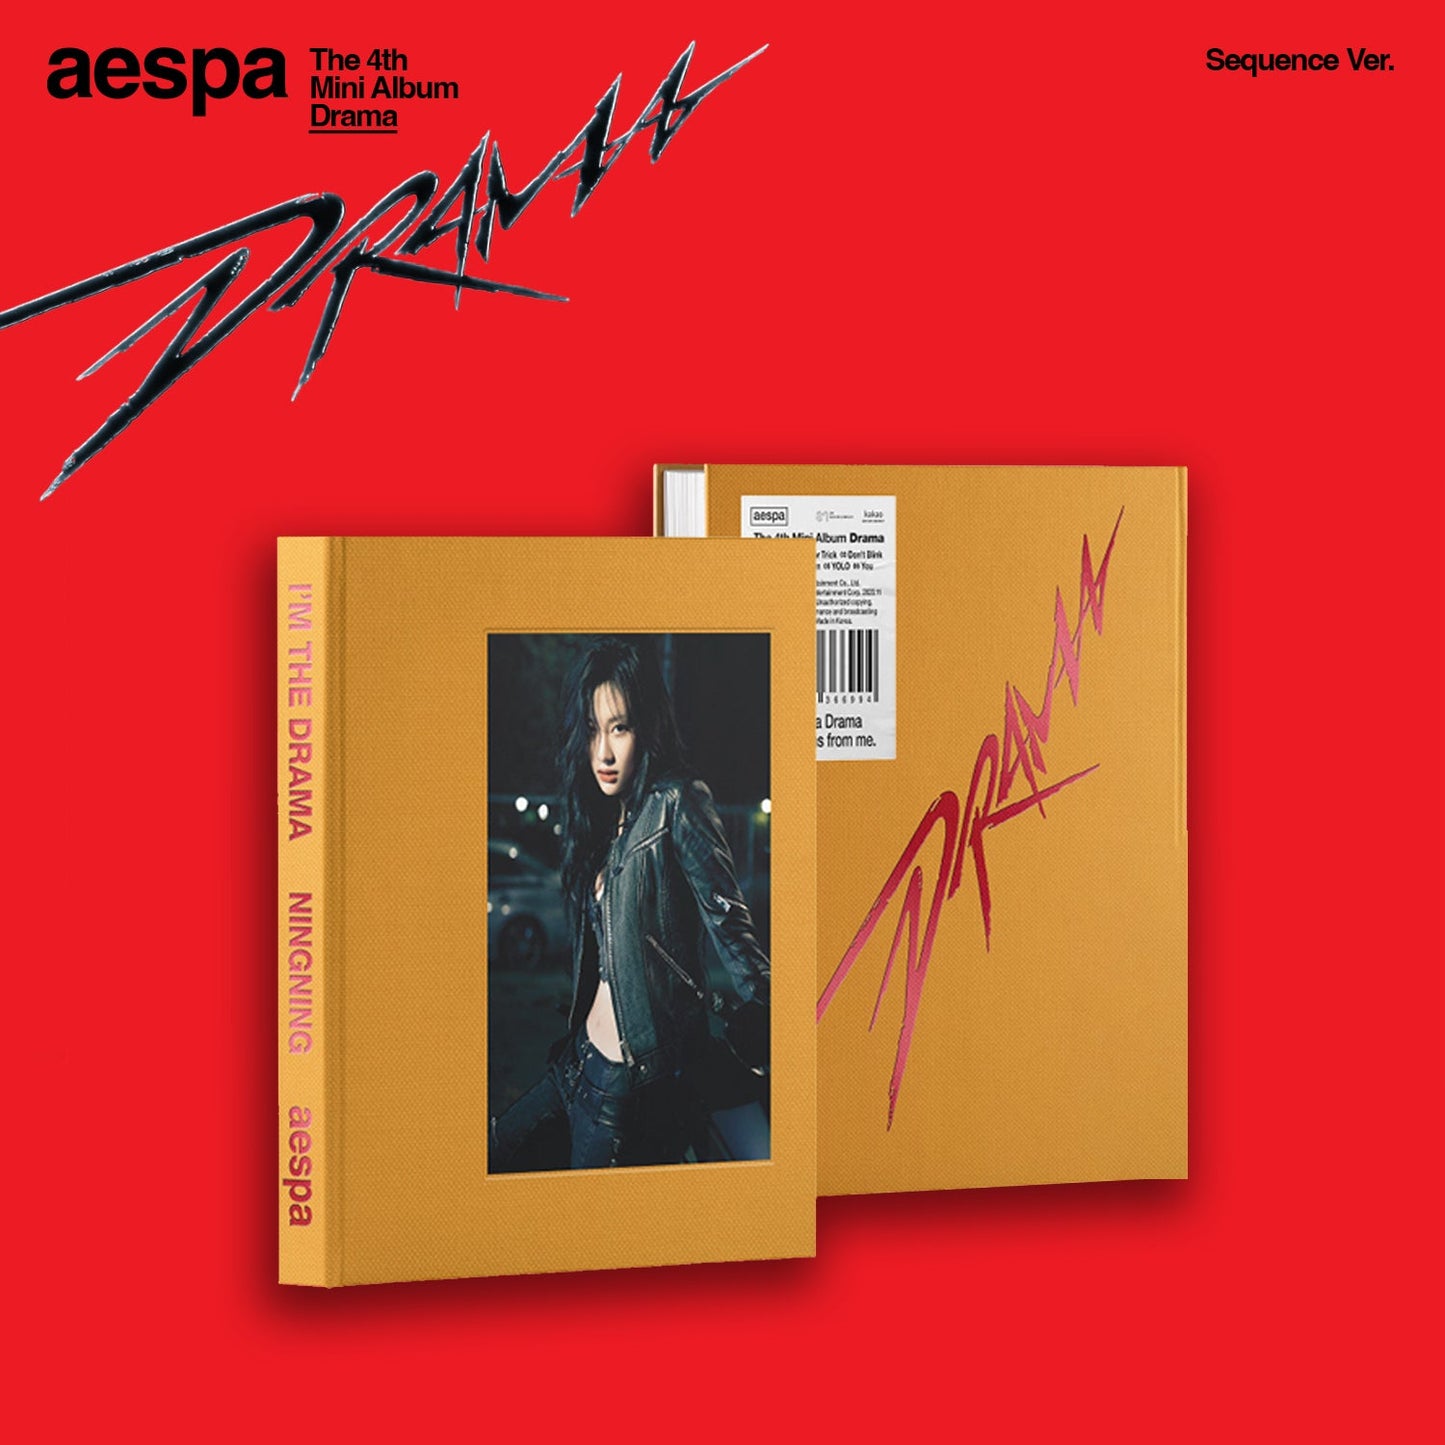 AESPA 4TH MINI ALBUM 'DRAMA' (SEQUENCE) NINGNING VERSION COVER